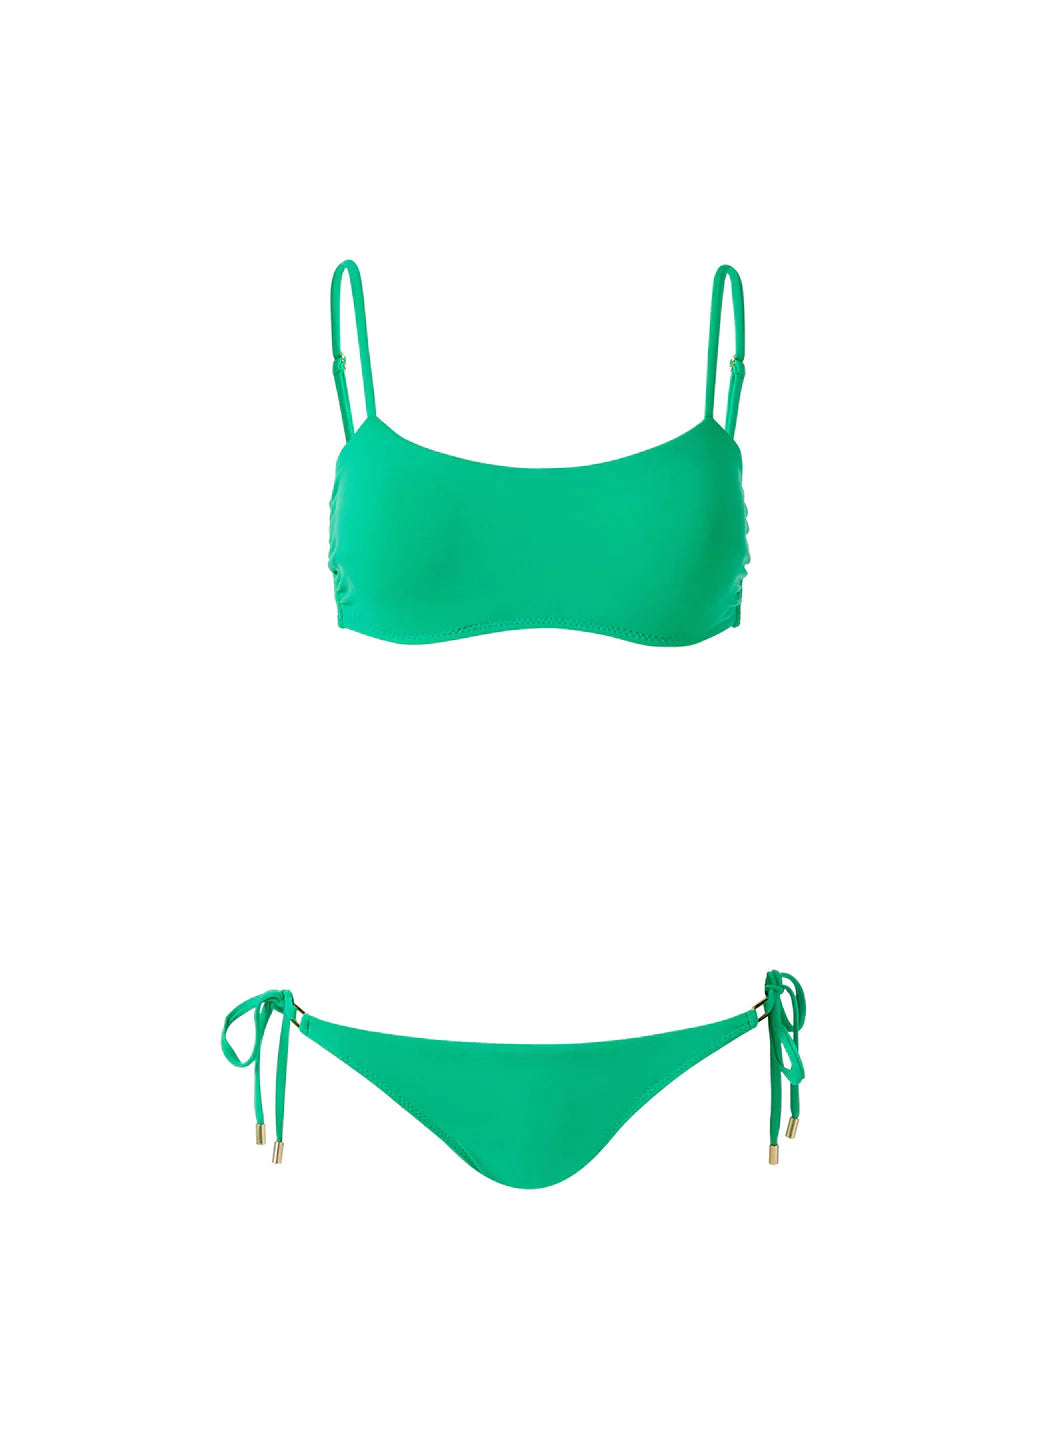 GoldBee Overall Tightening Swimwear Brazilian Moss Green - GoldBee